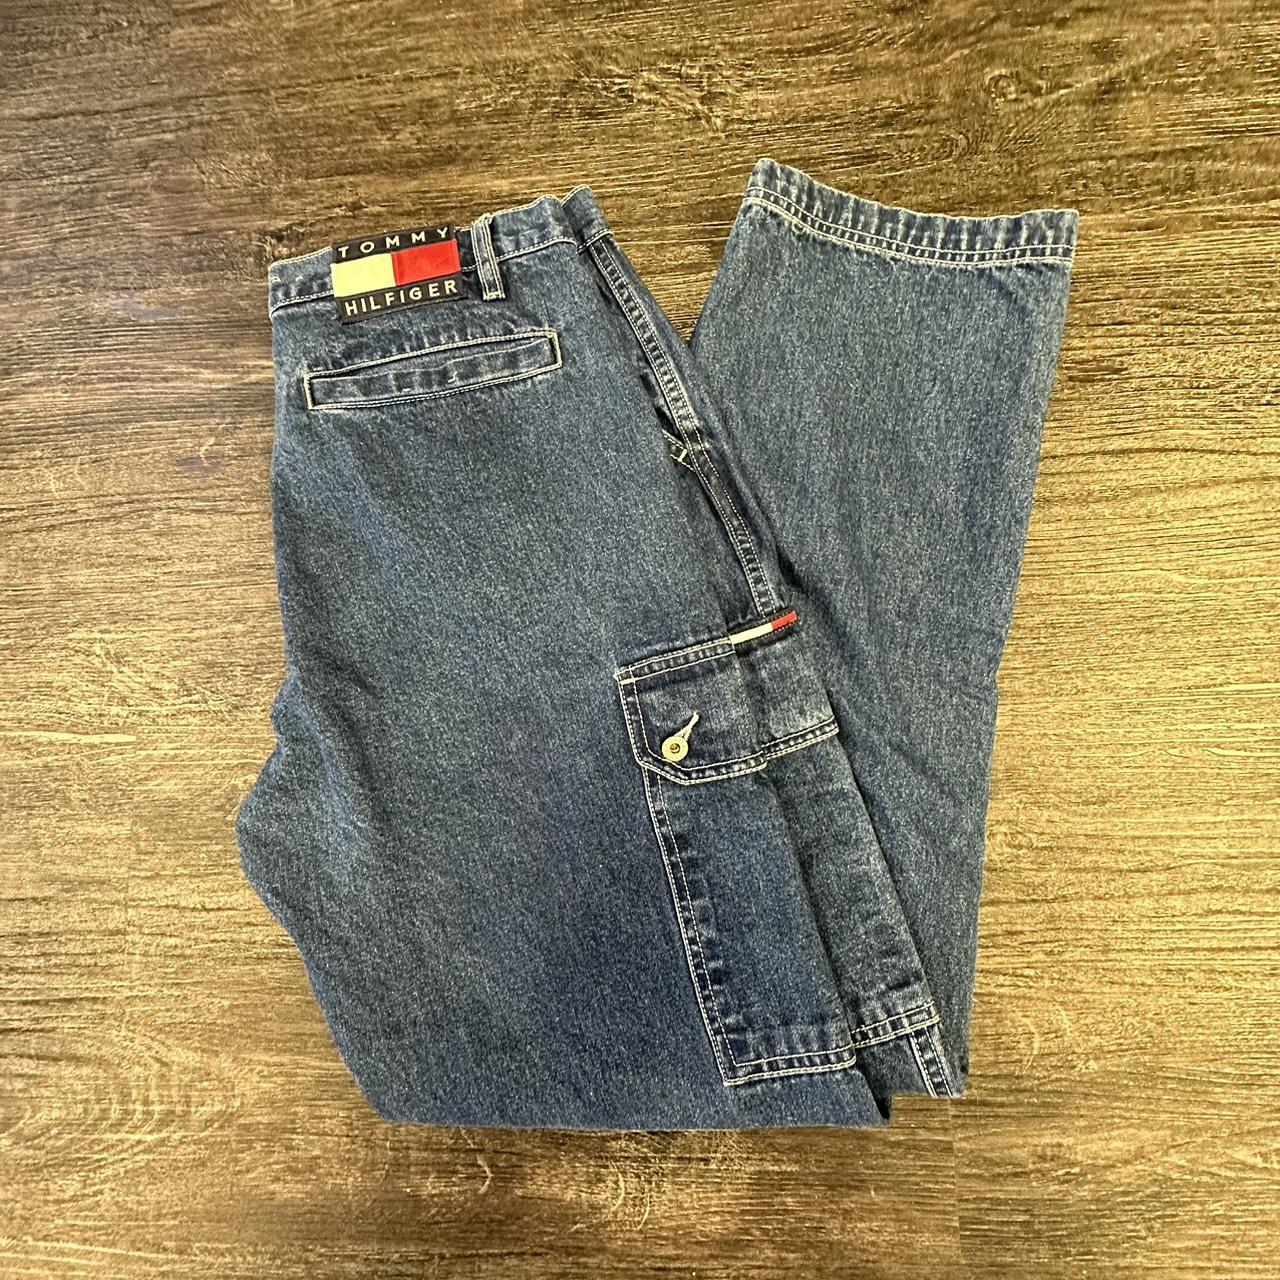 Tommy Hilfiger Men's Blue and Navy Jeans